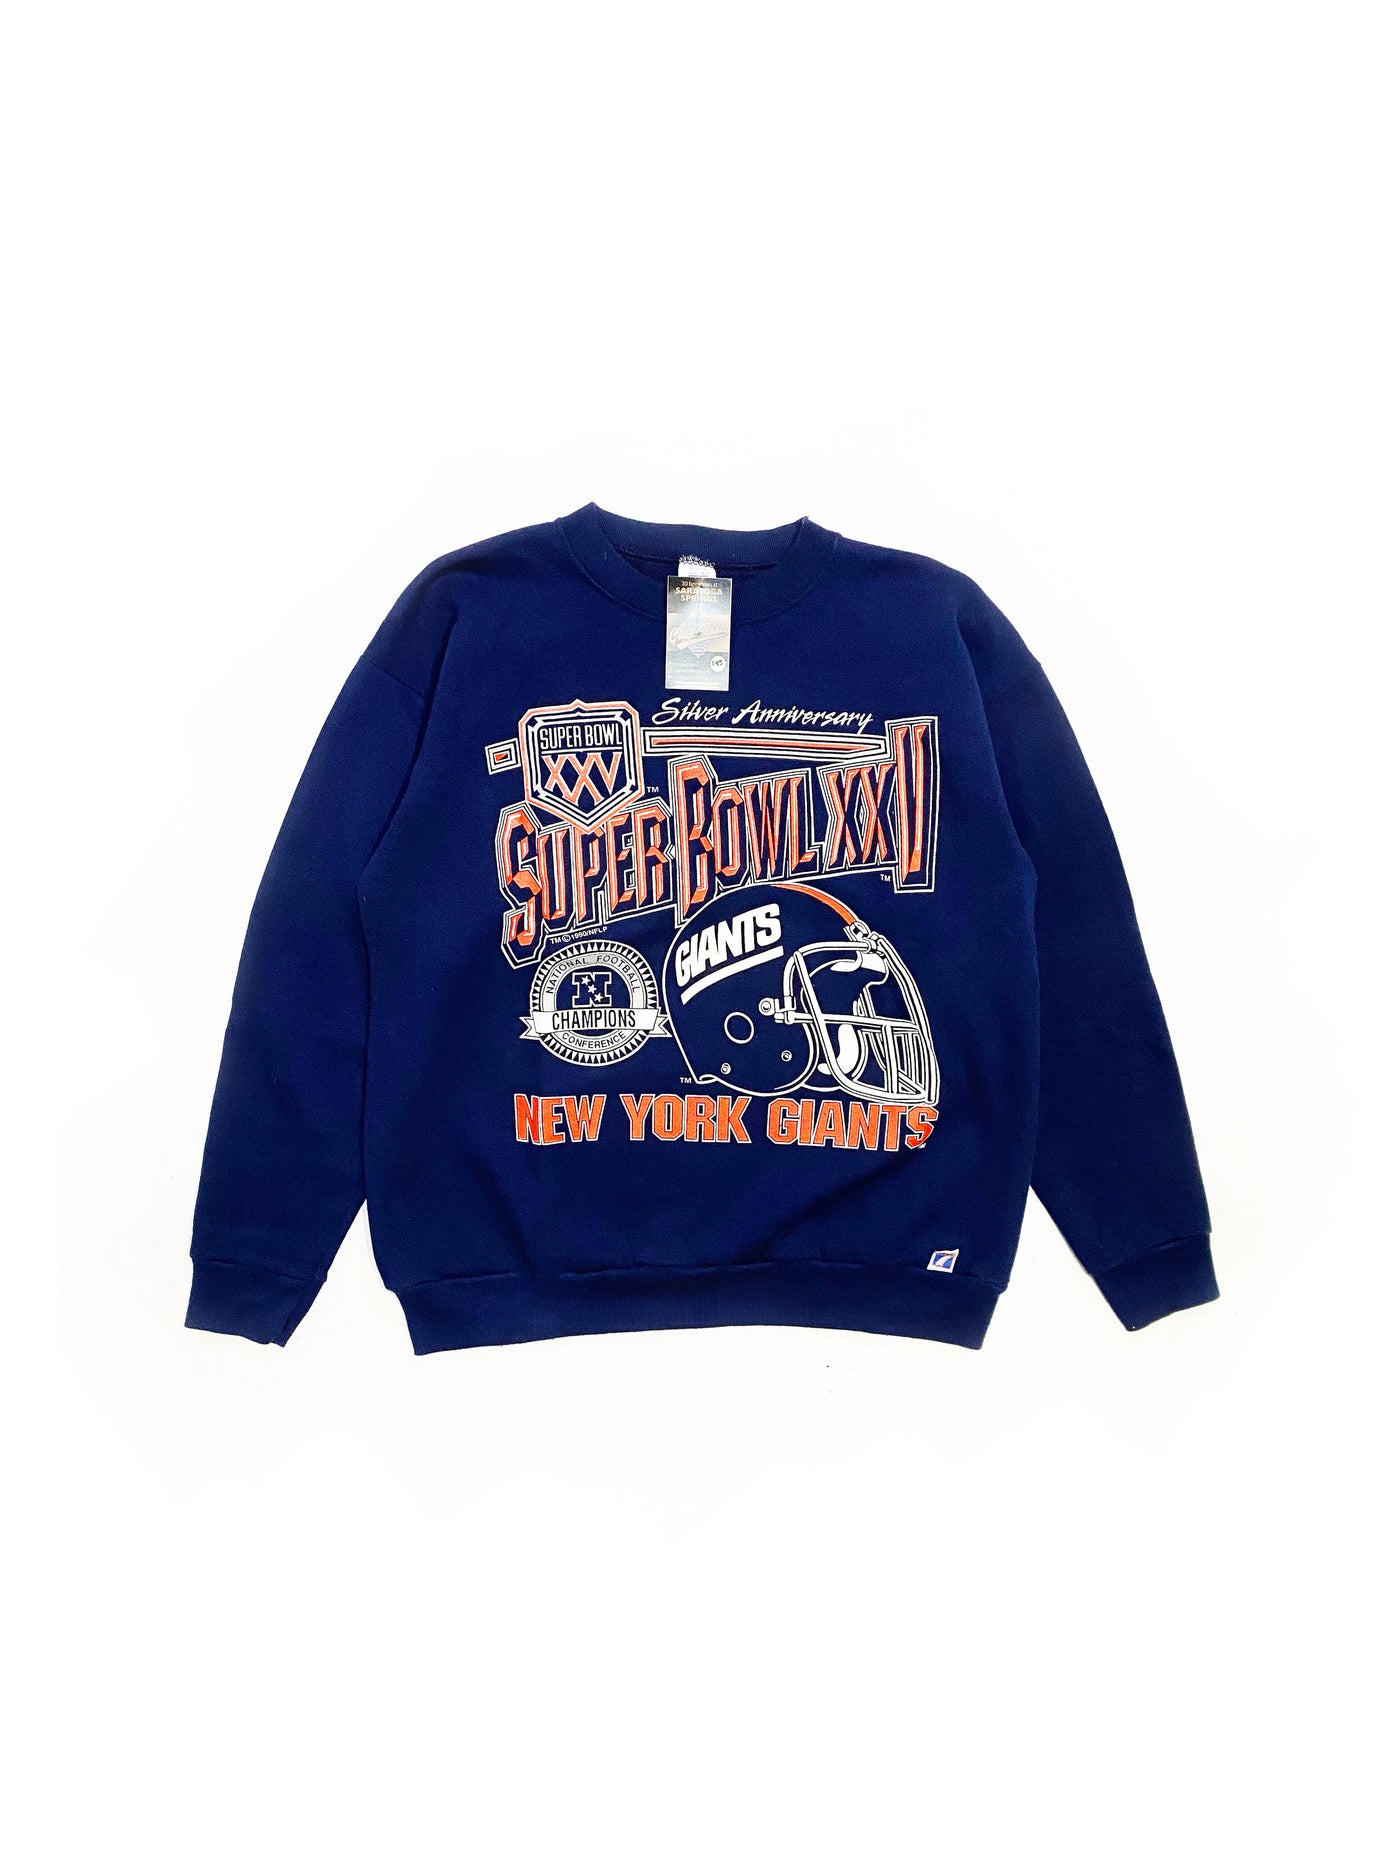 Vintage 1990 New York Giants Super Bowl Crewneck